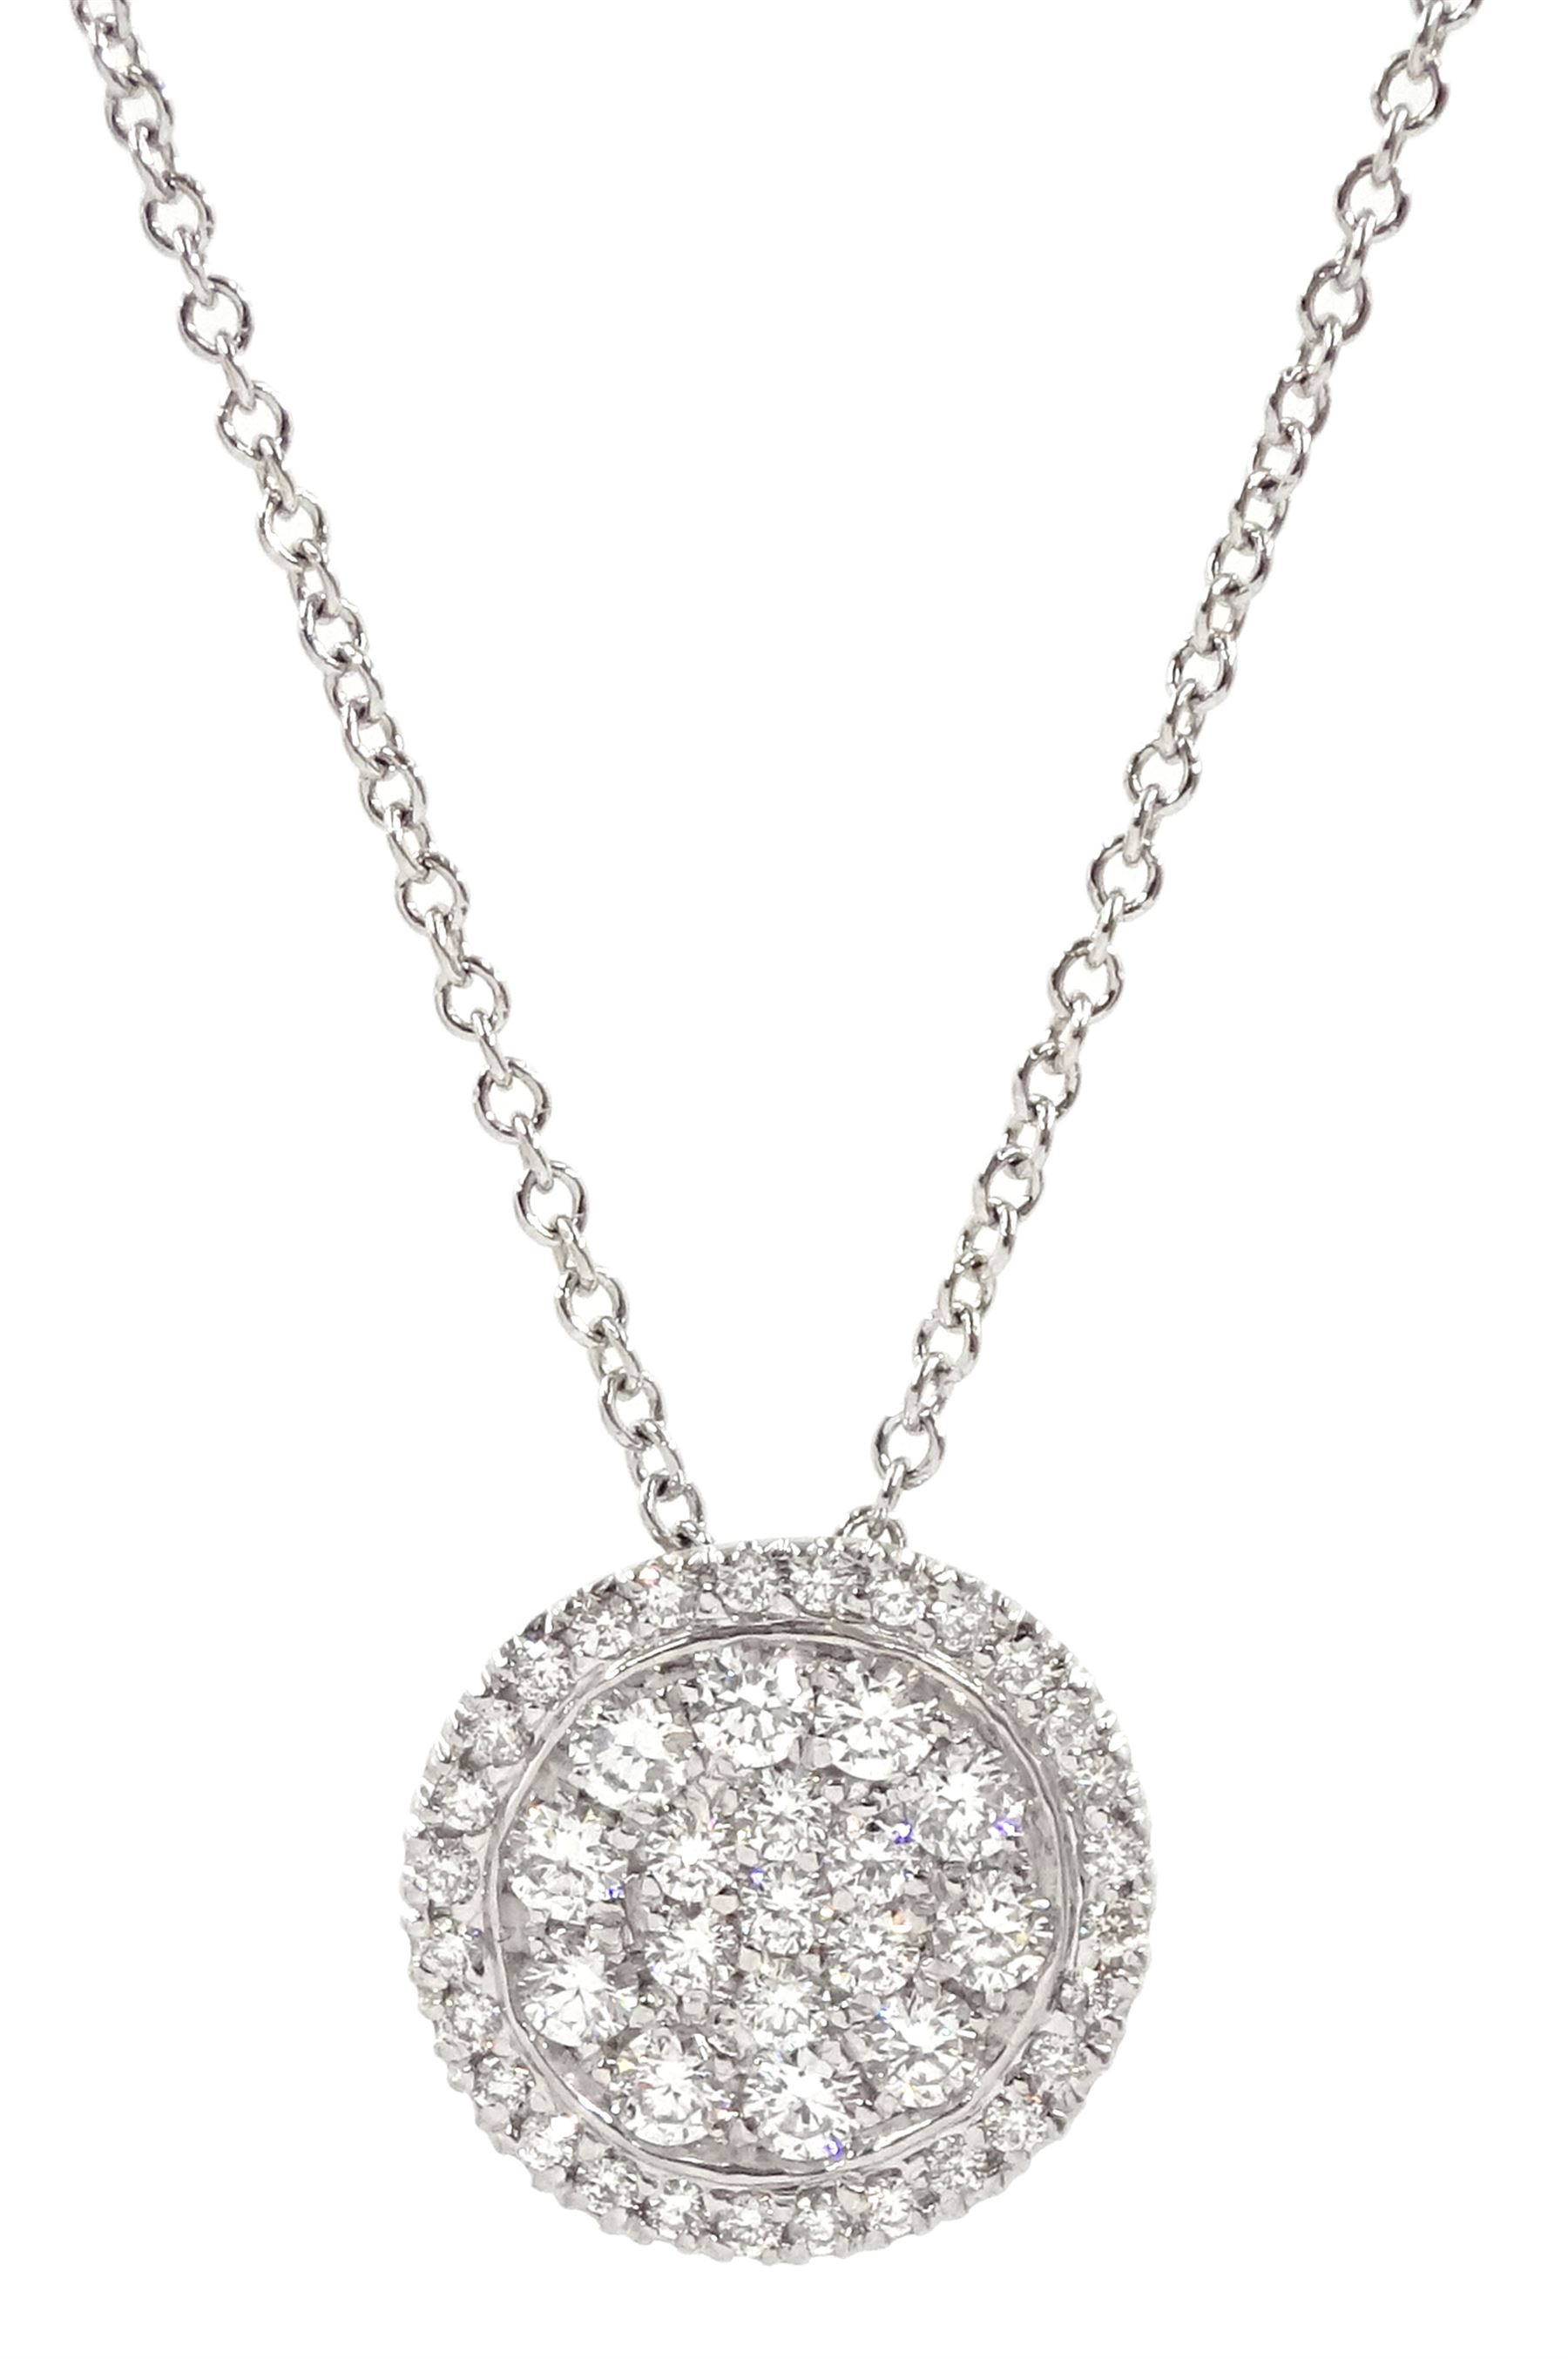 18ct white gold pave set round brilliant cut diamond circular pendant necklace